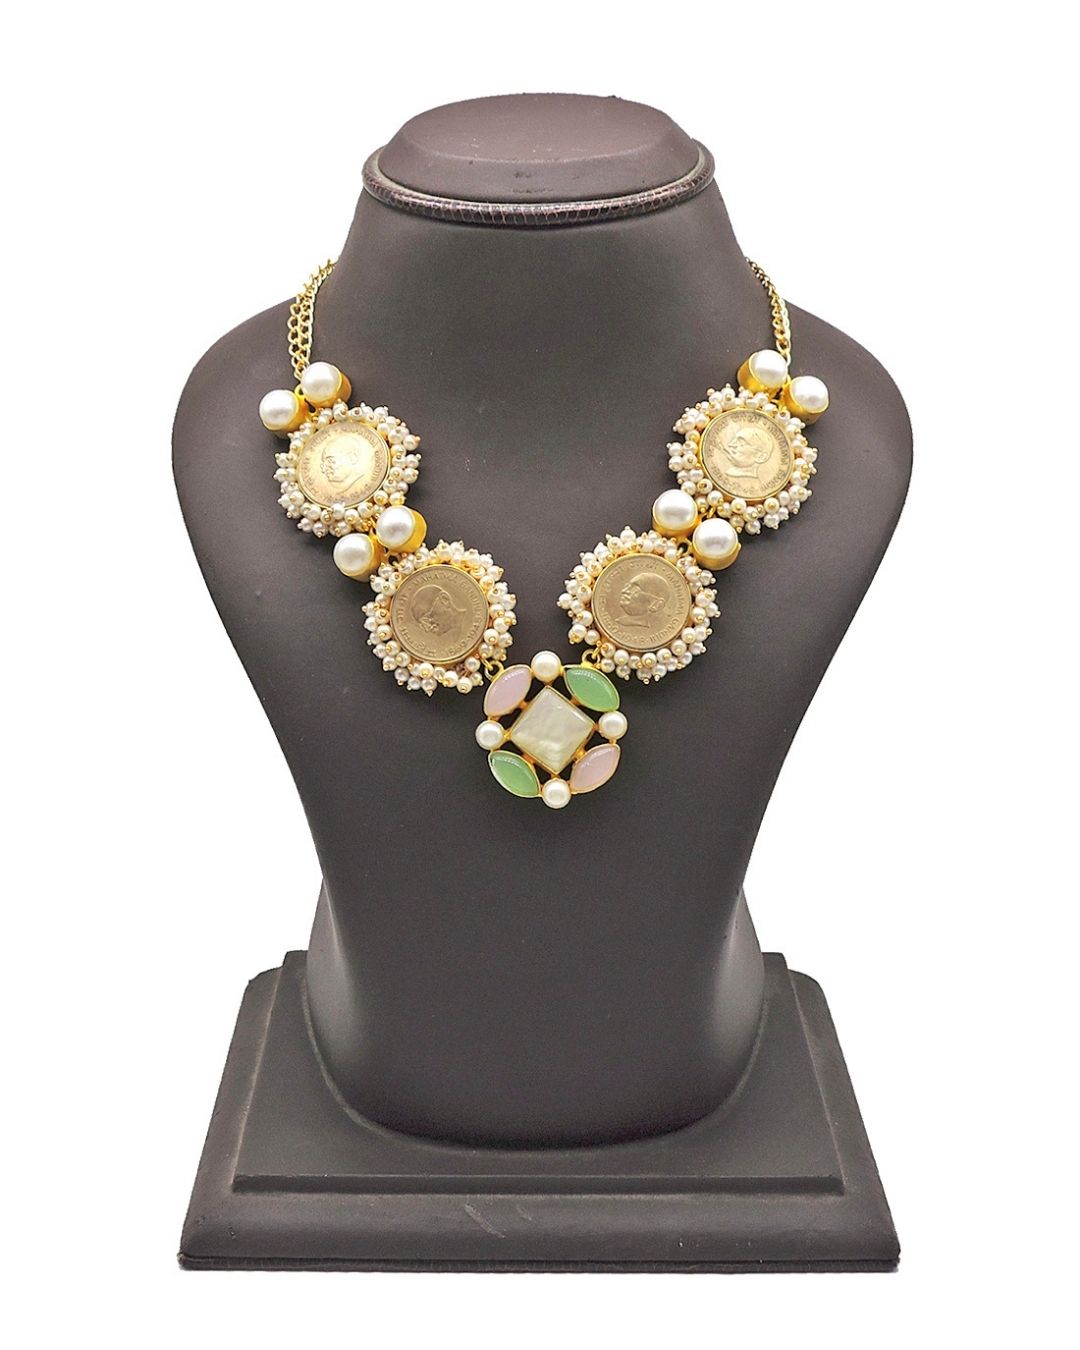 Sadie Neckace - Necklaces - Handcrafted Jewellery - Made in India - Dubai Jewellery, Fashion & Lifestyle - Dori